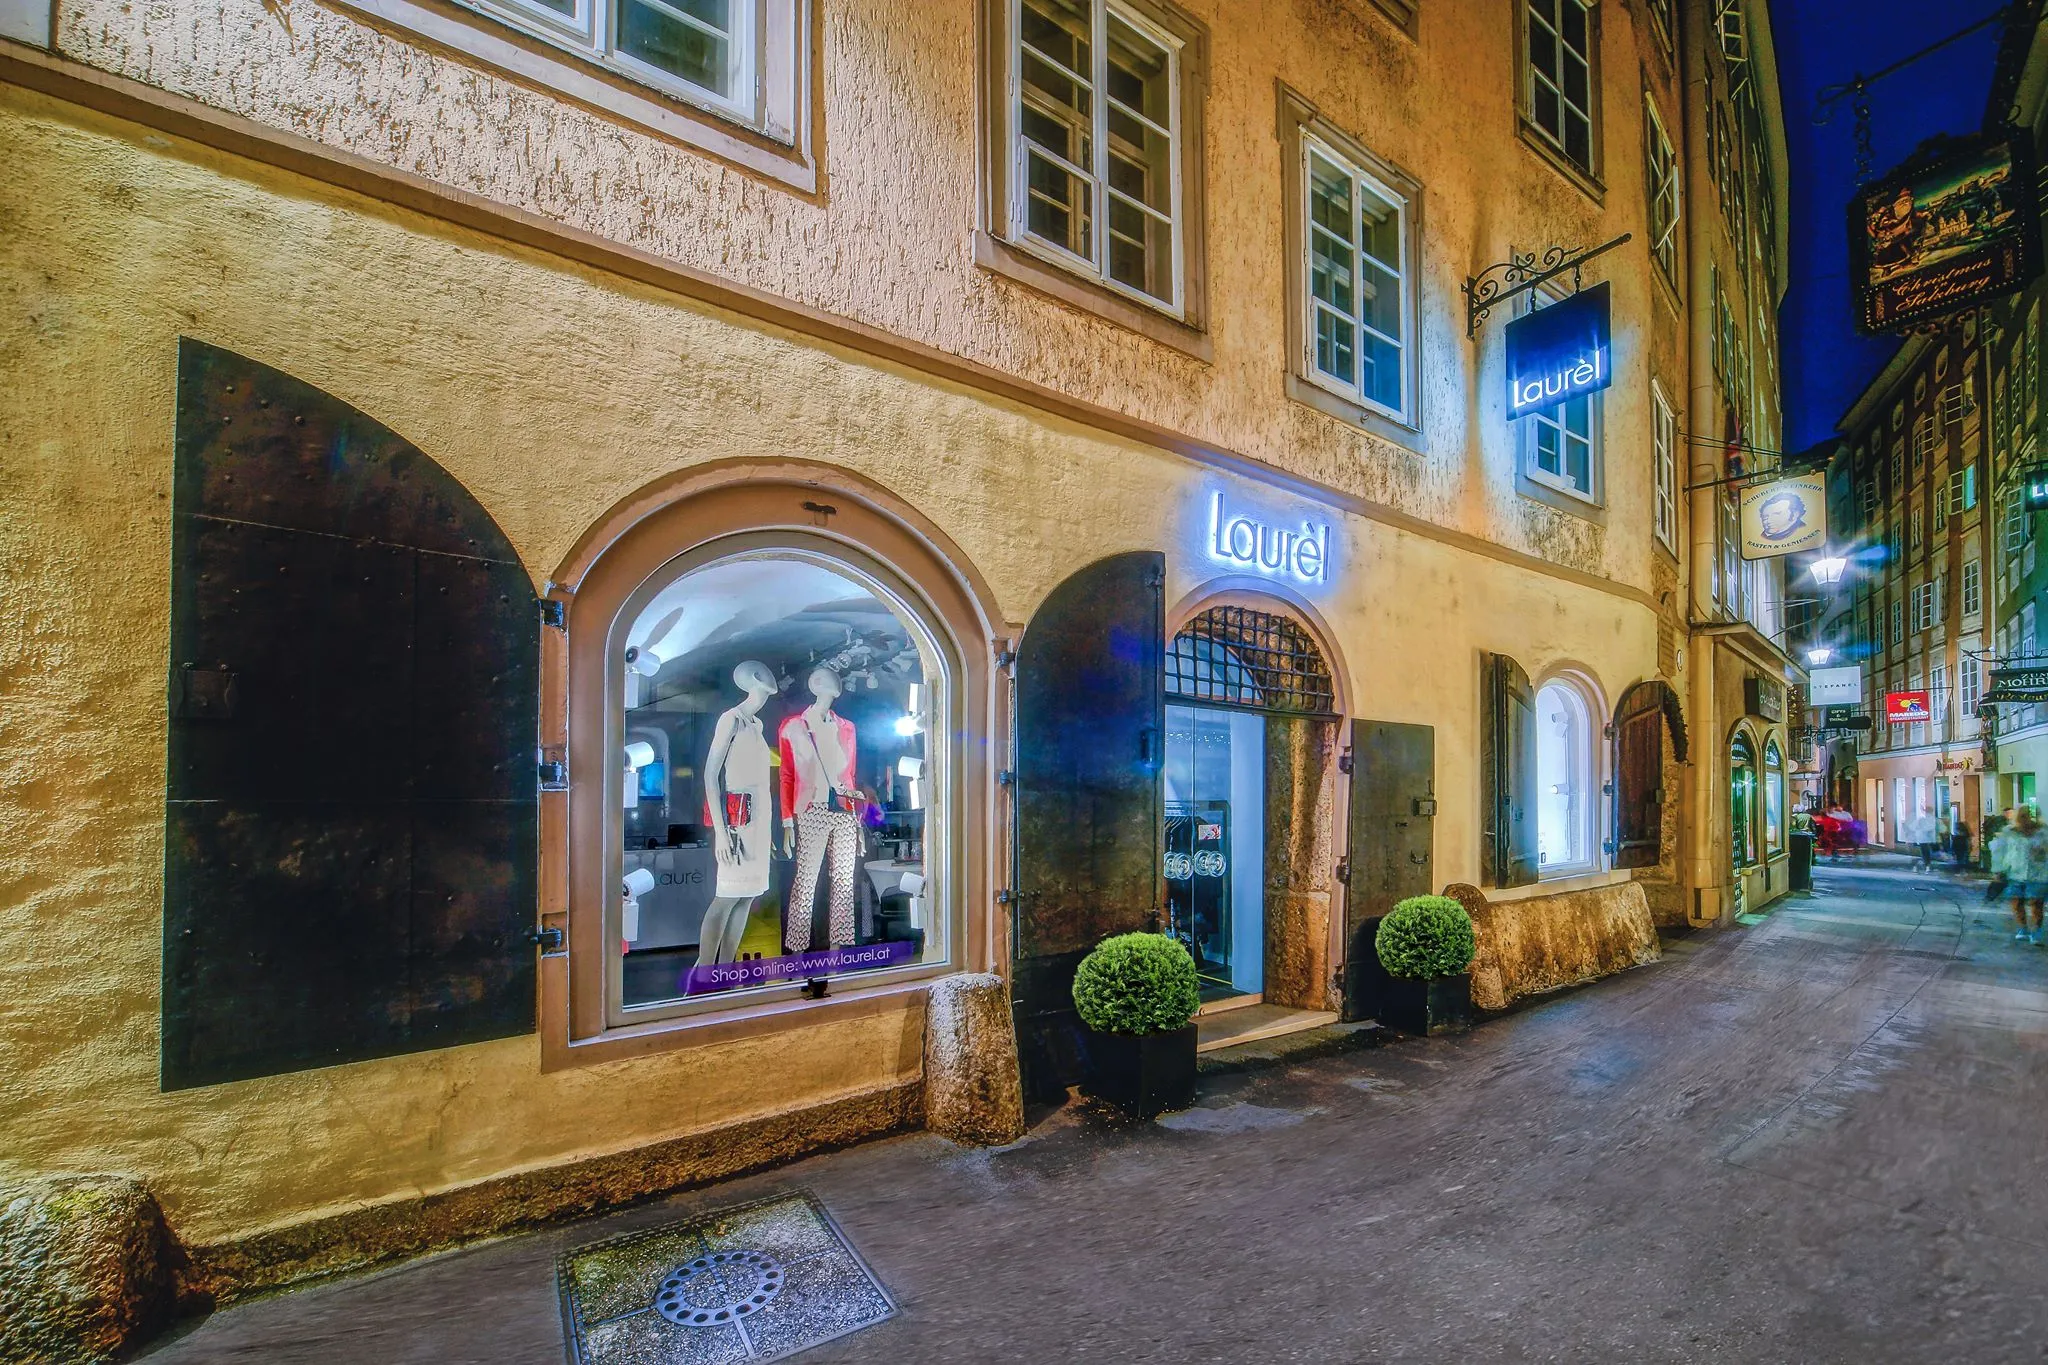 Laurel Store Salzburg in Austria, europe | Clothes - Country Helper